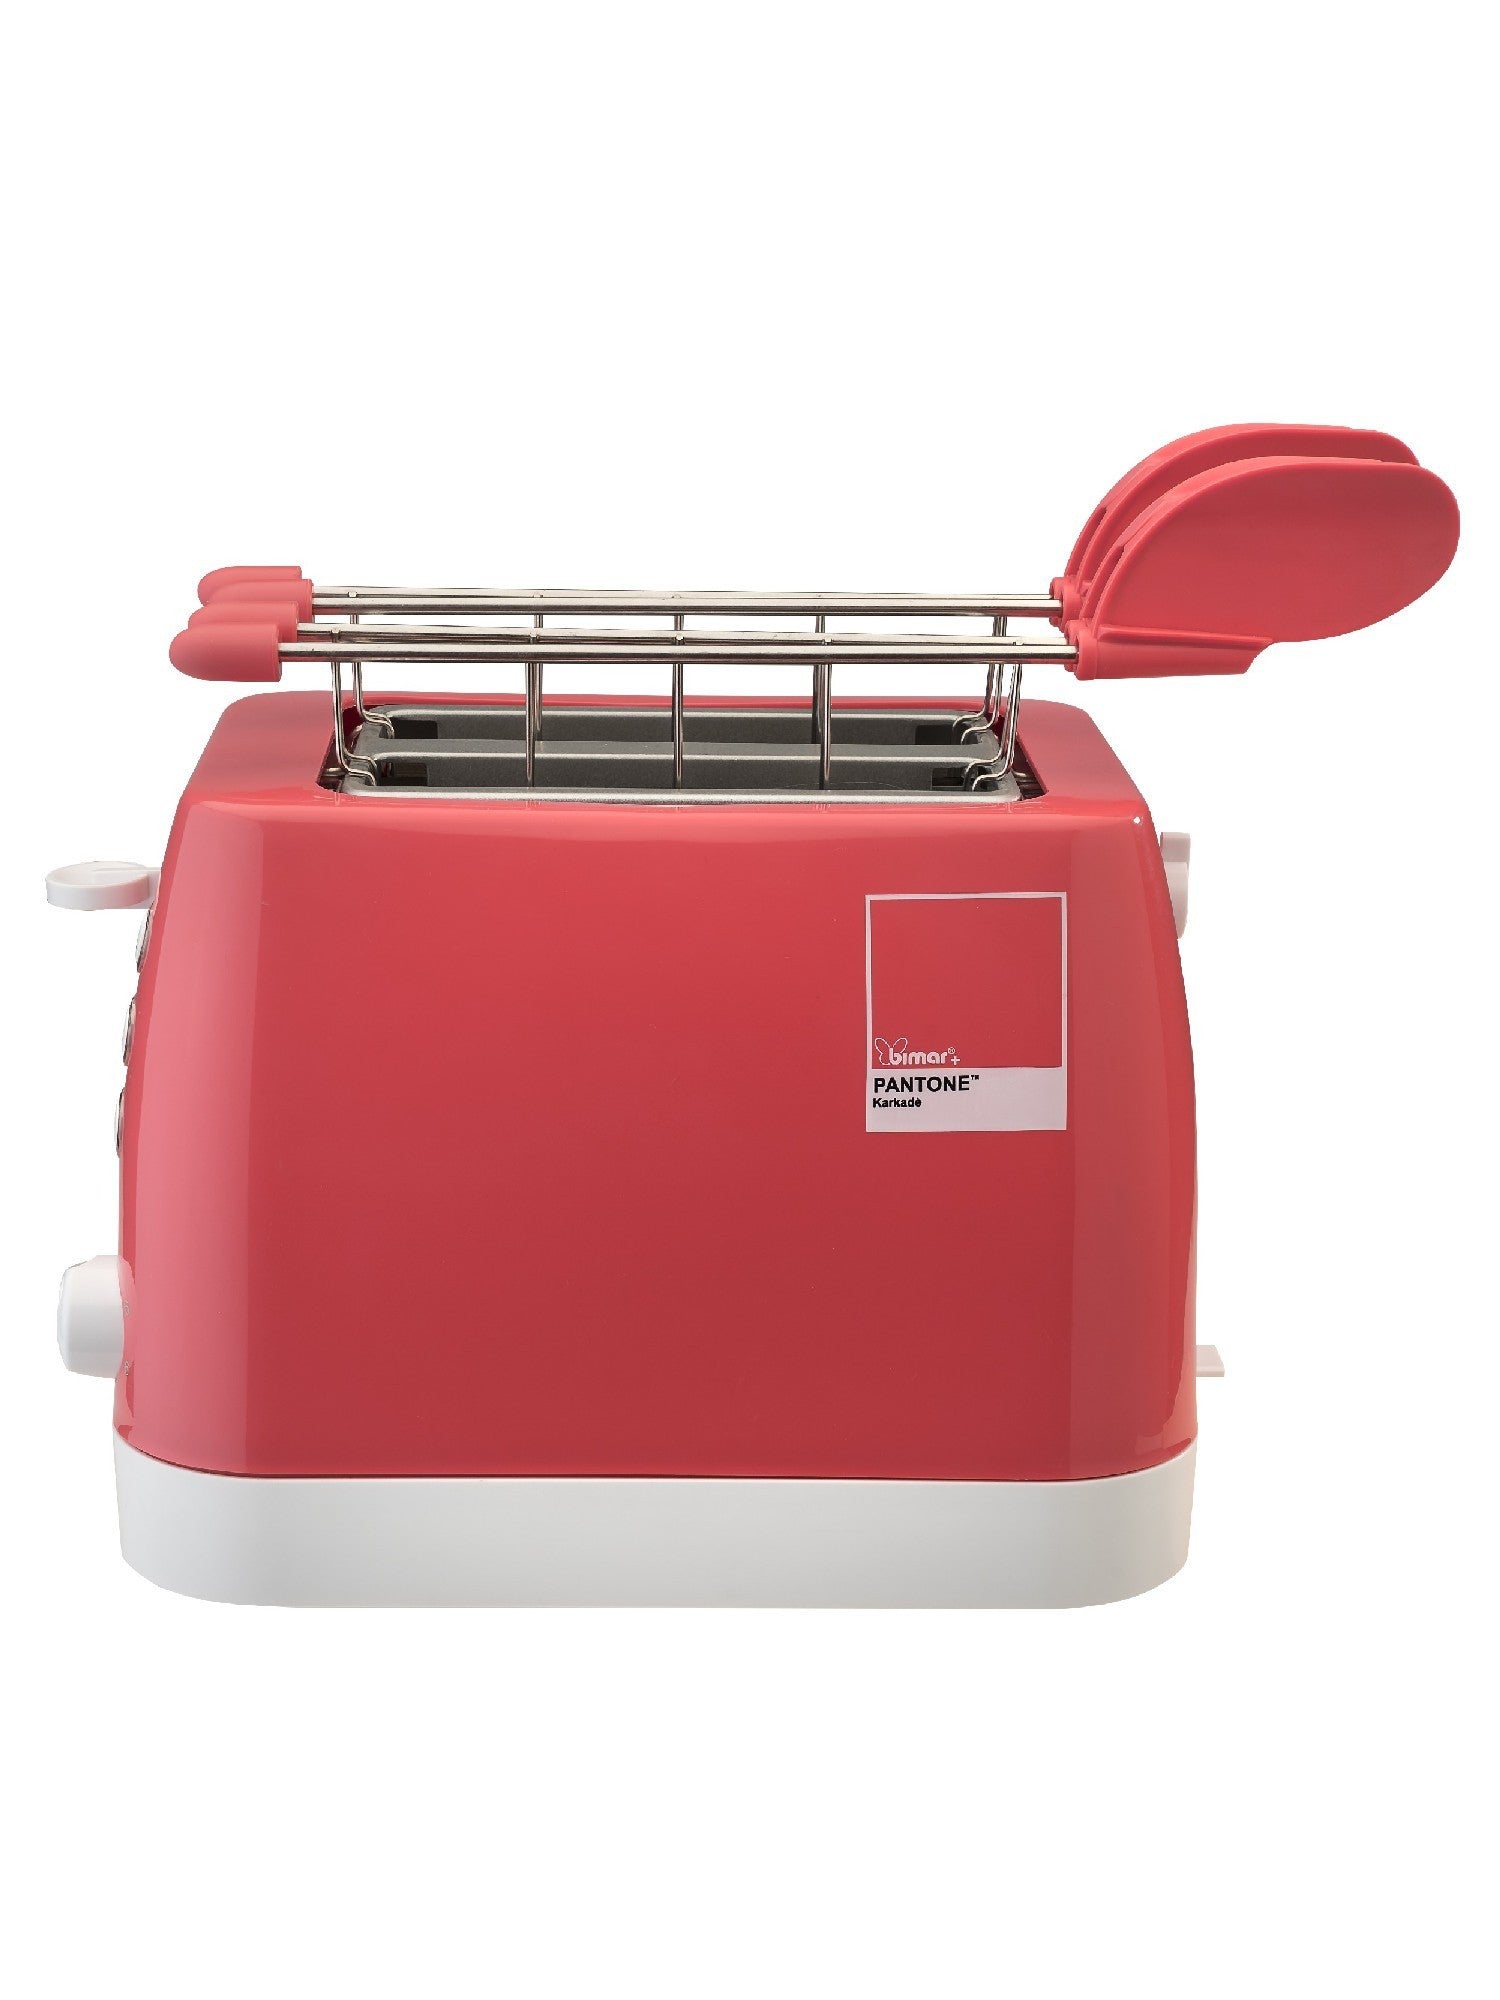 Bimar - Pantone toaster